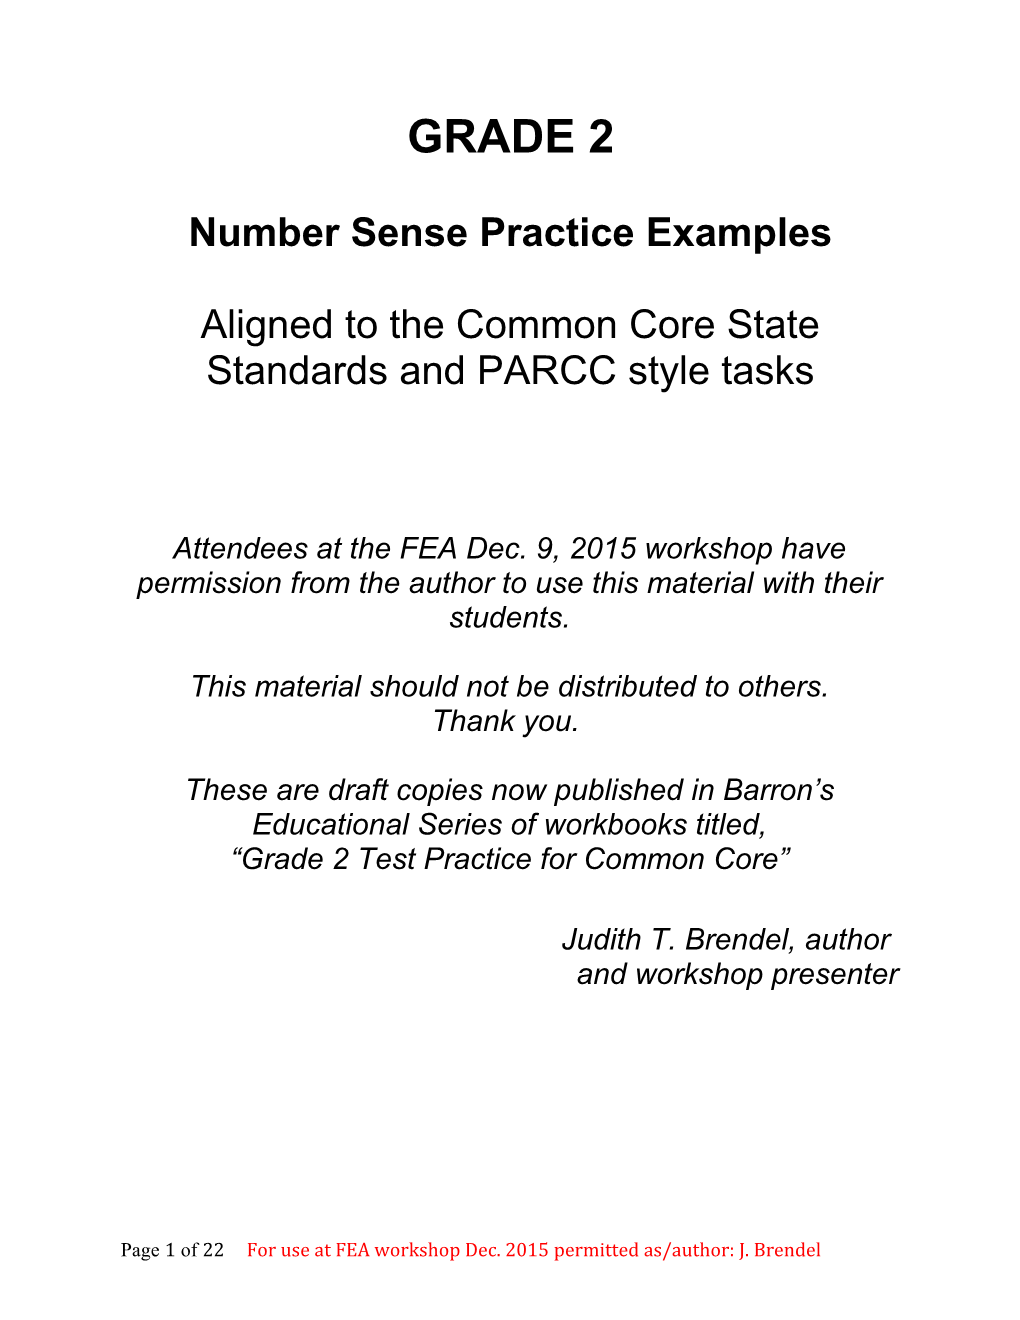 Number Sense Practice Examples